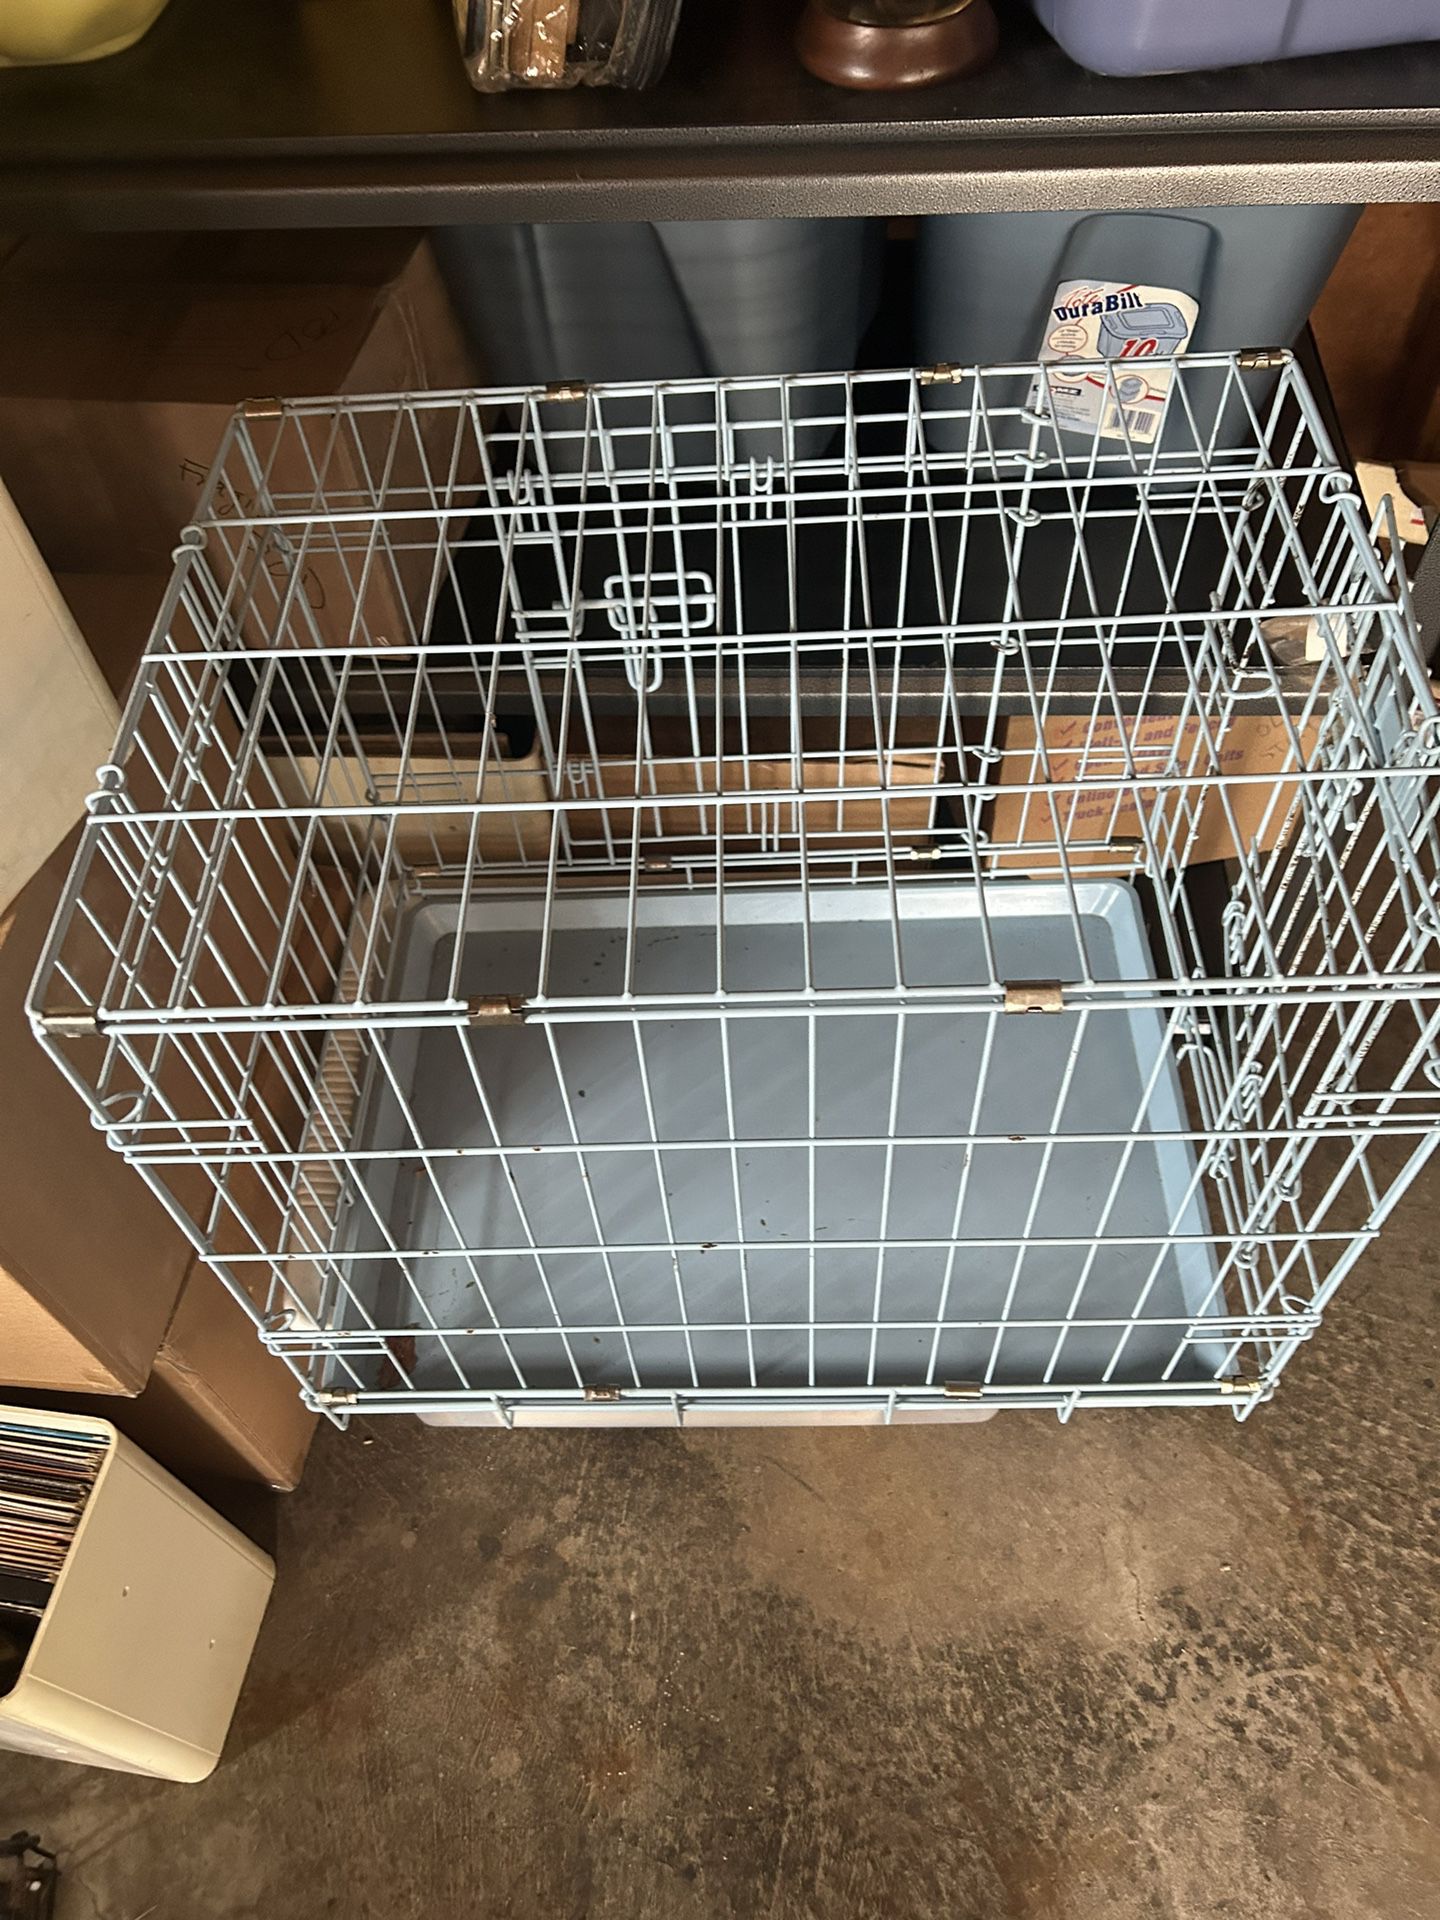 Dog/animal crate